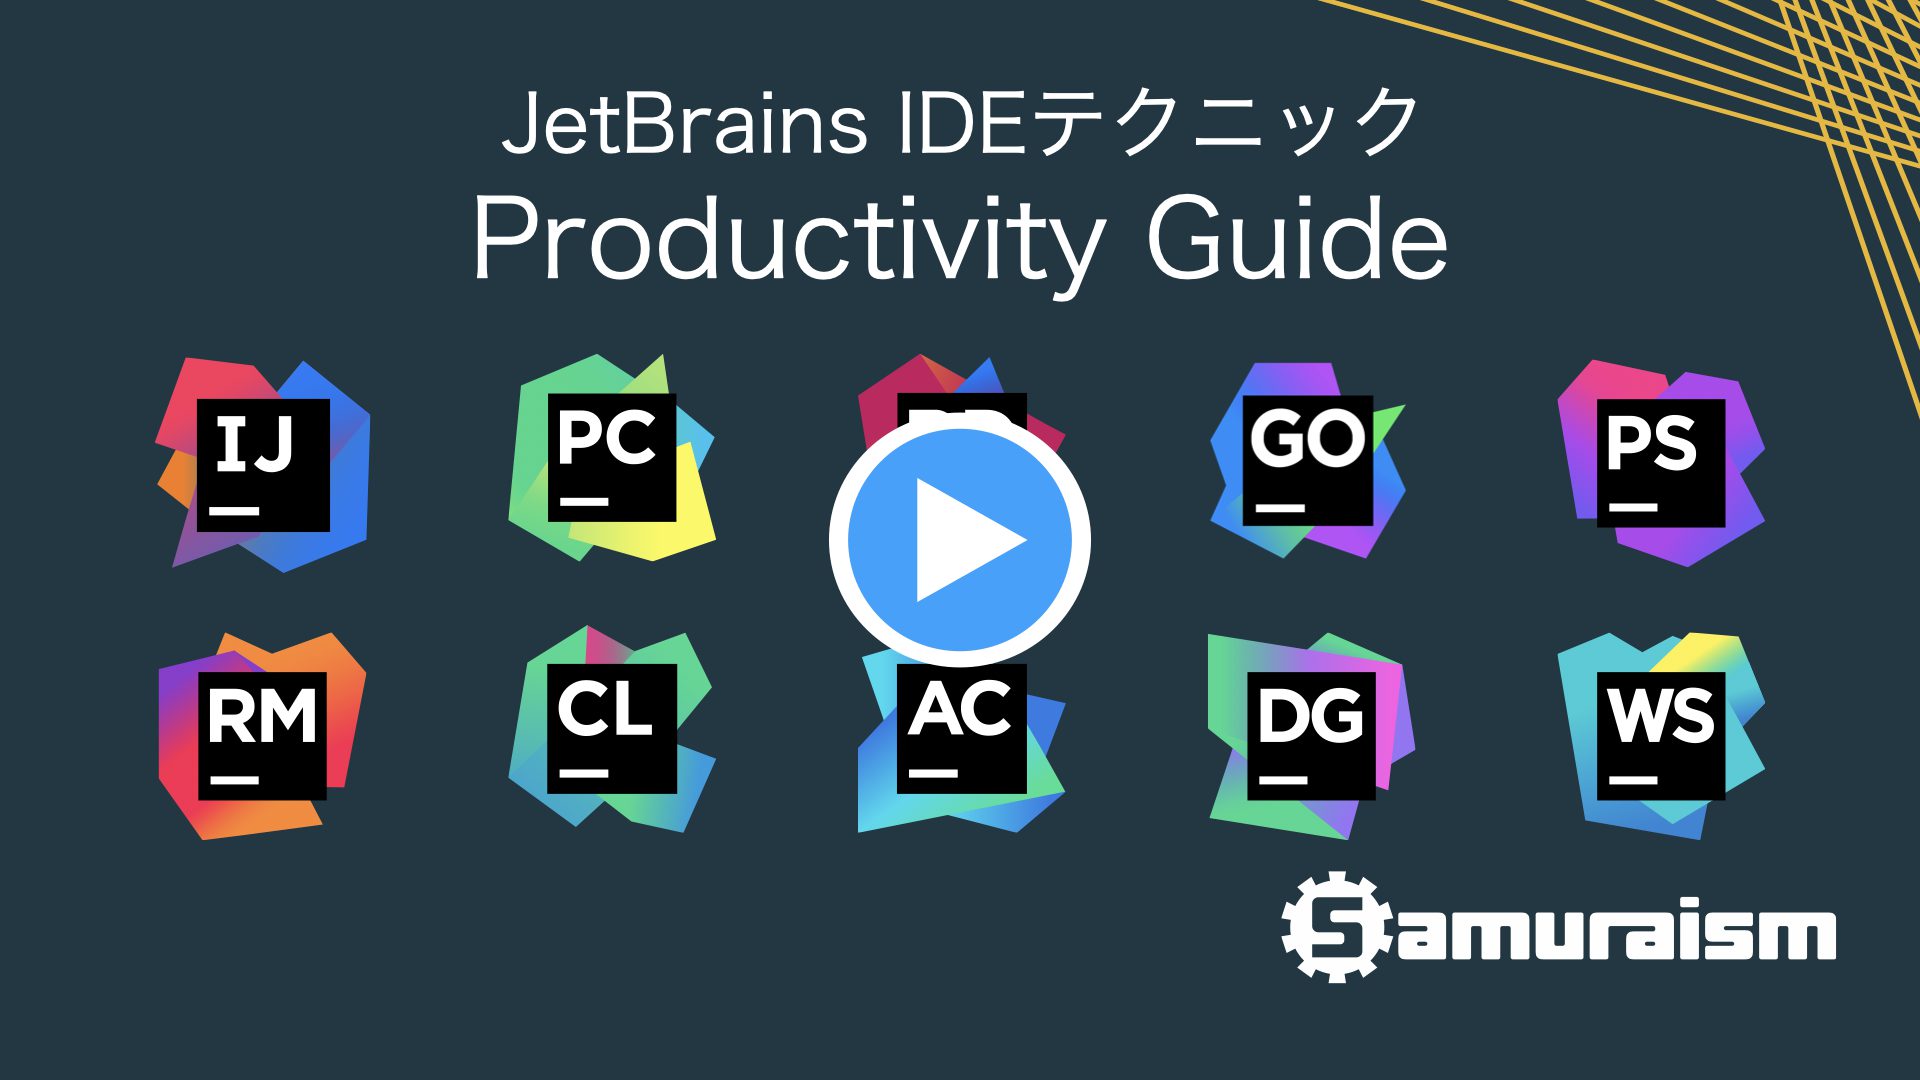 #JetBrainsIDEテクニック – Productivity Guide